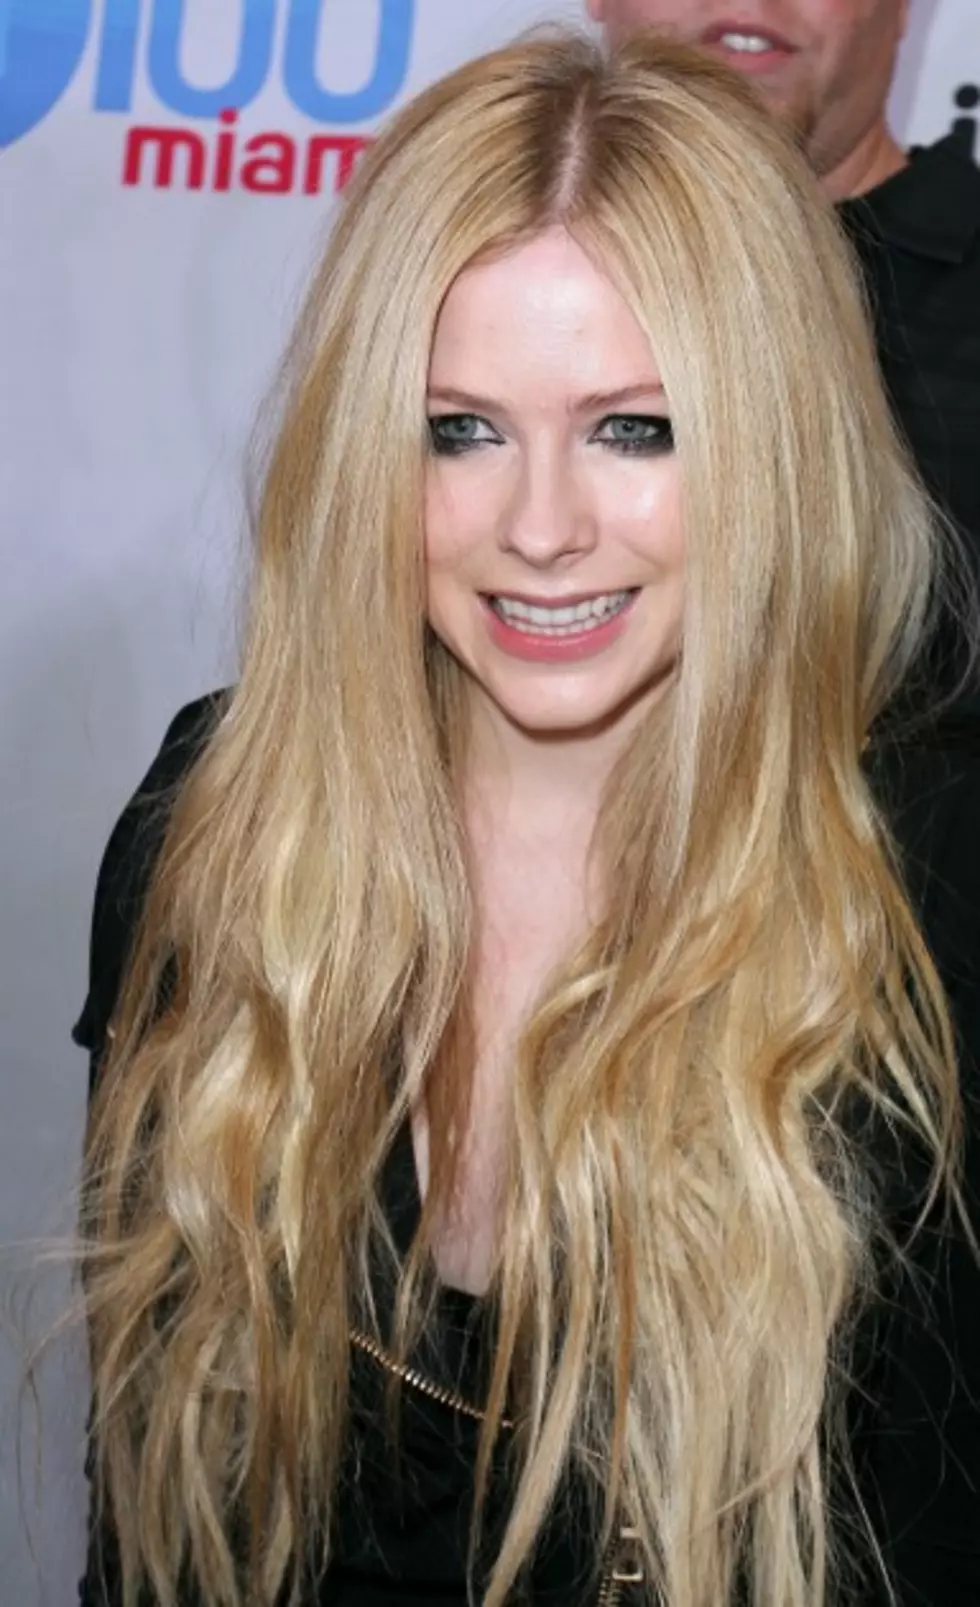 Avril Lavigne Afraid of Brazilians?